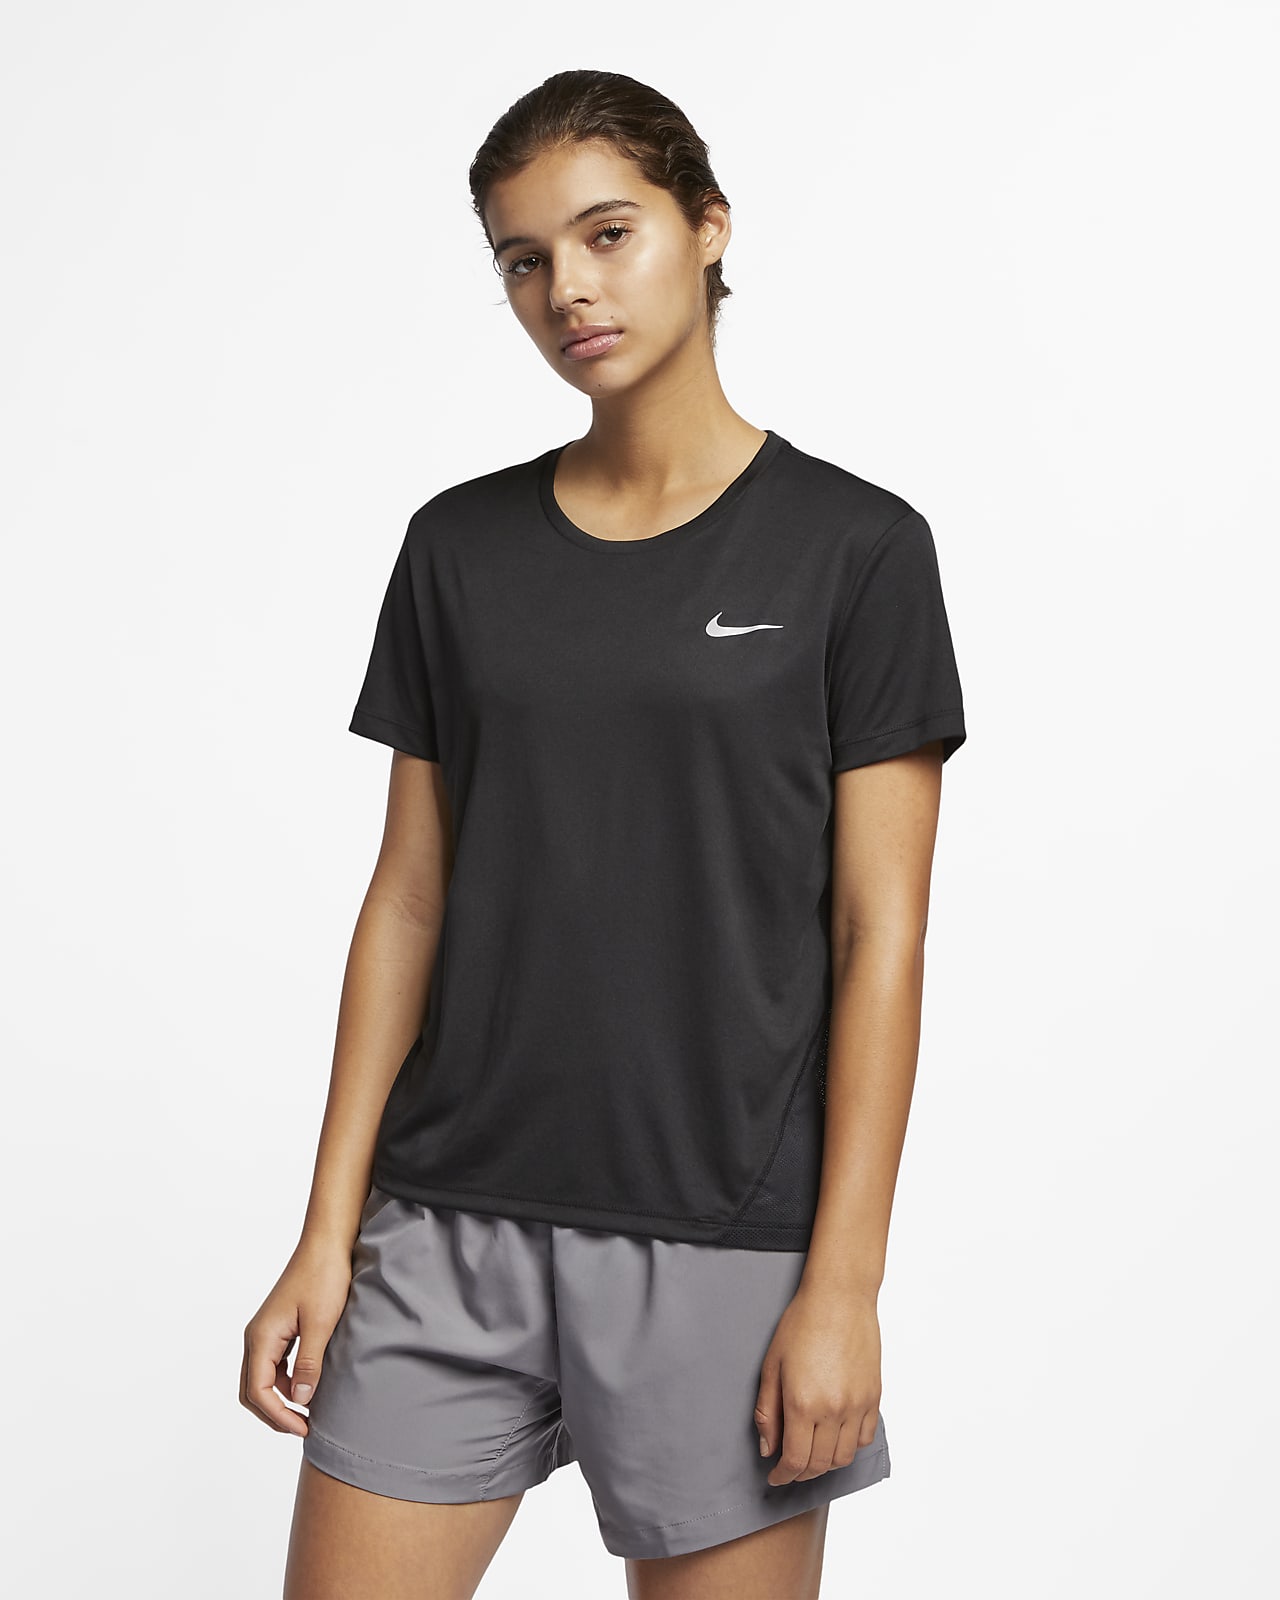 Nike Miler Women's Short-Sleeve Running Top. Nike LU